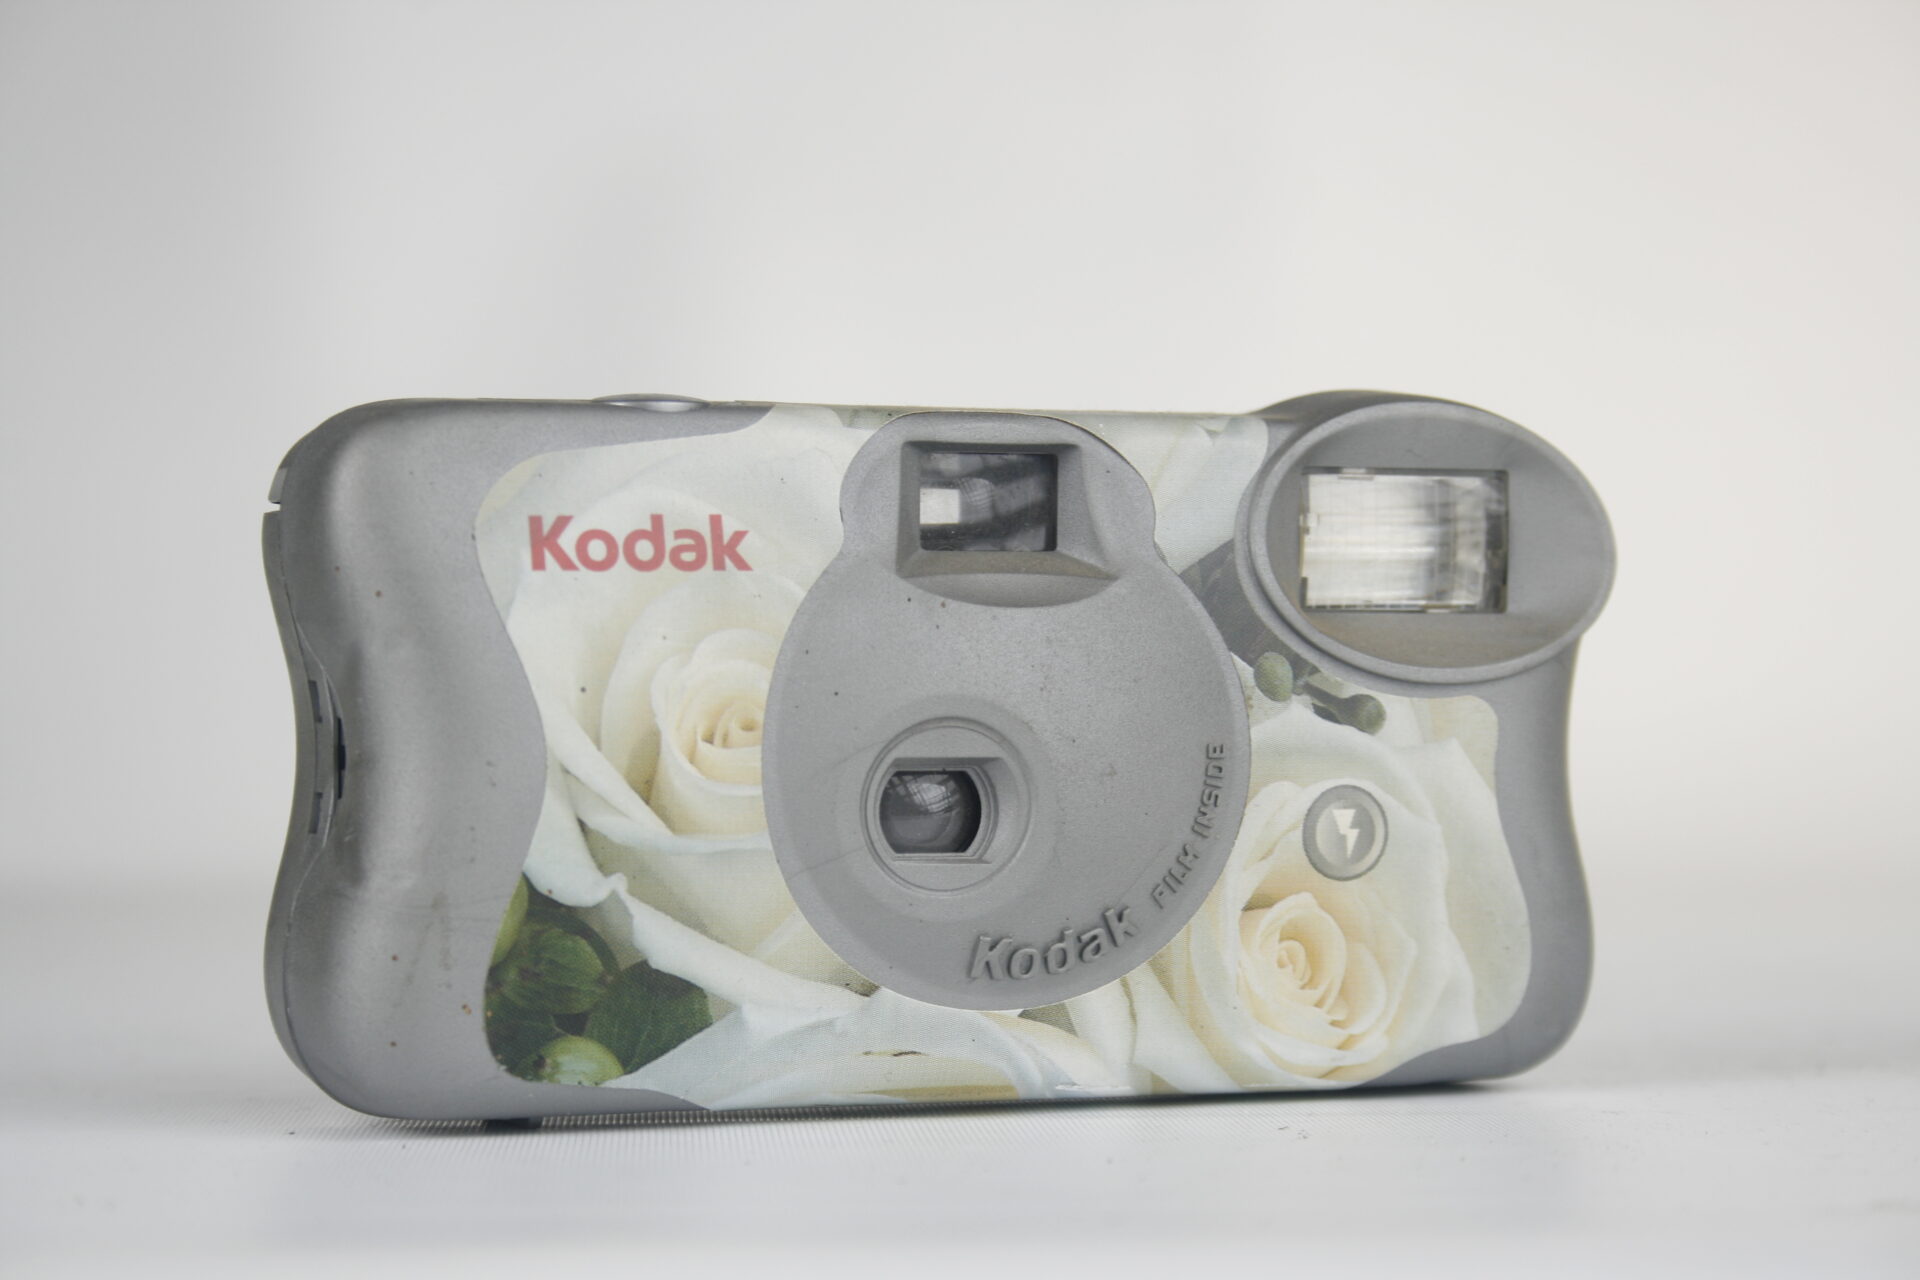 Kodak Pocket camera met rozen print.